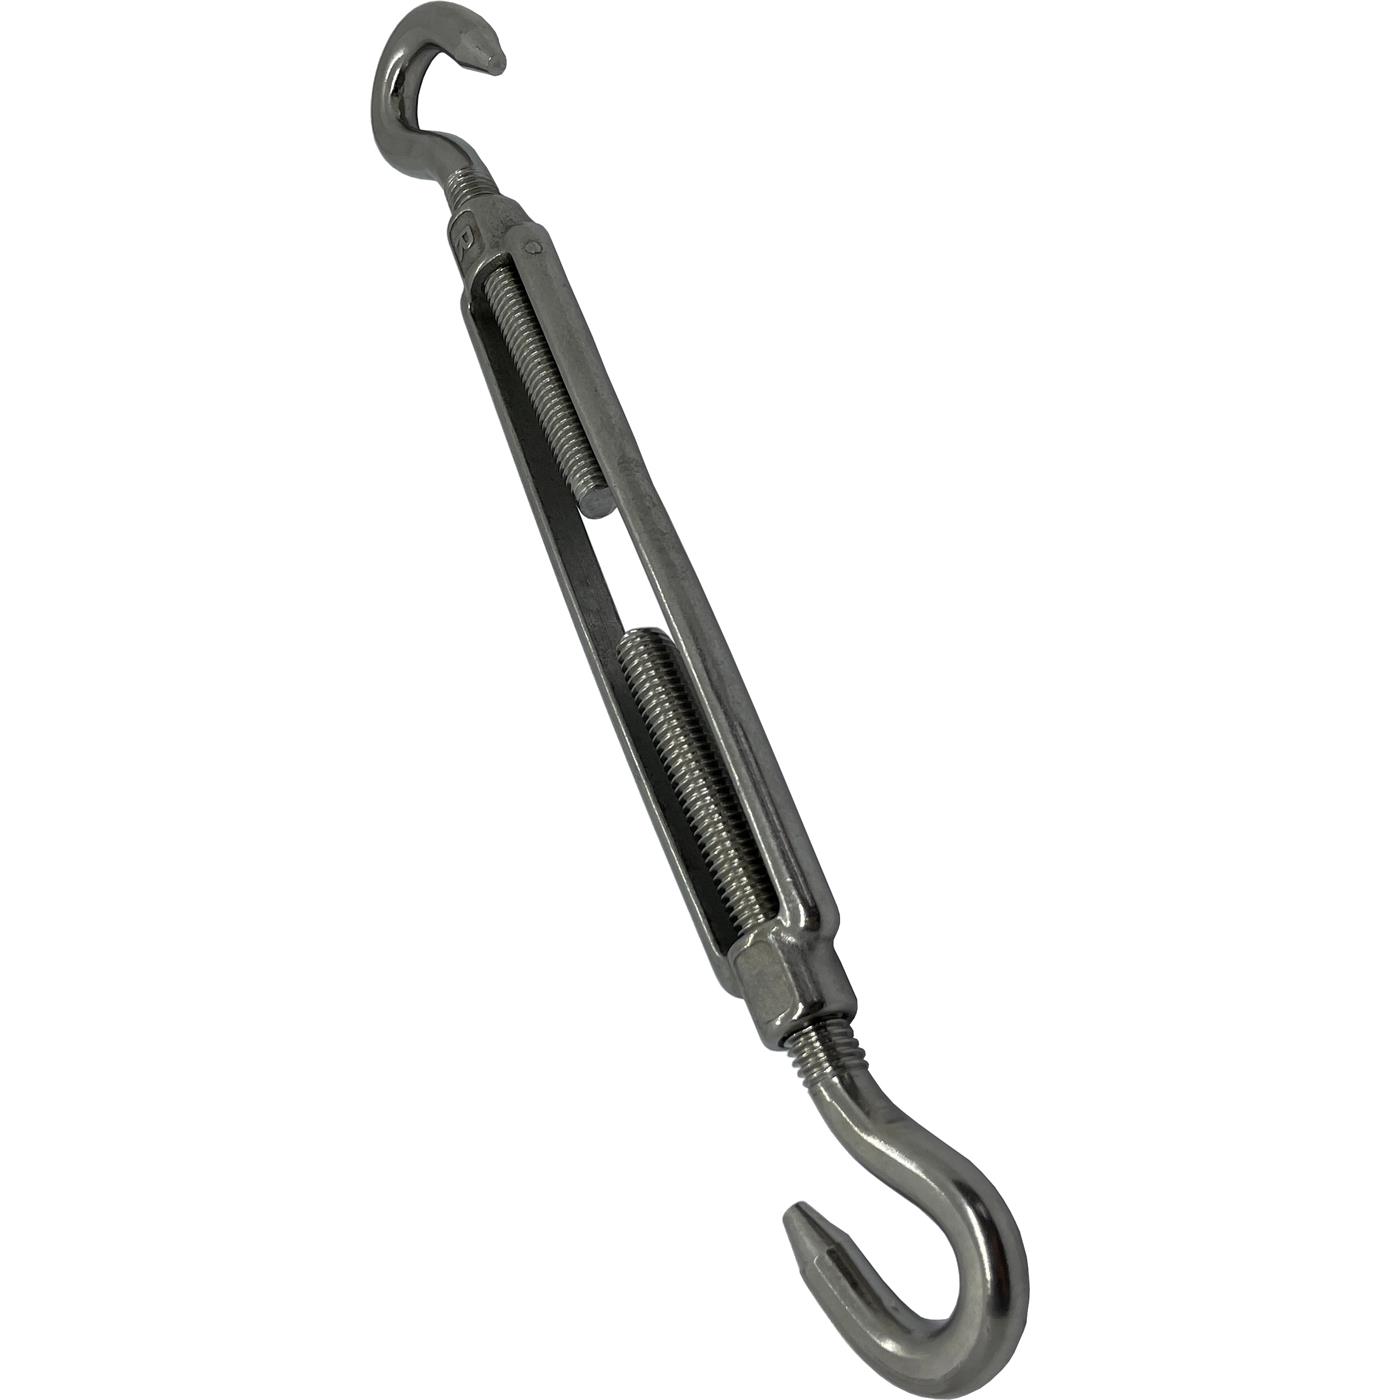 Rope tensioner Hook-Hook Stainless steel V2A 304 M5 Turnbuckle Shroud clamp